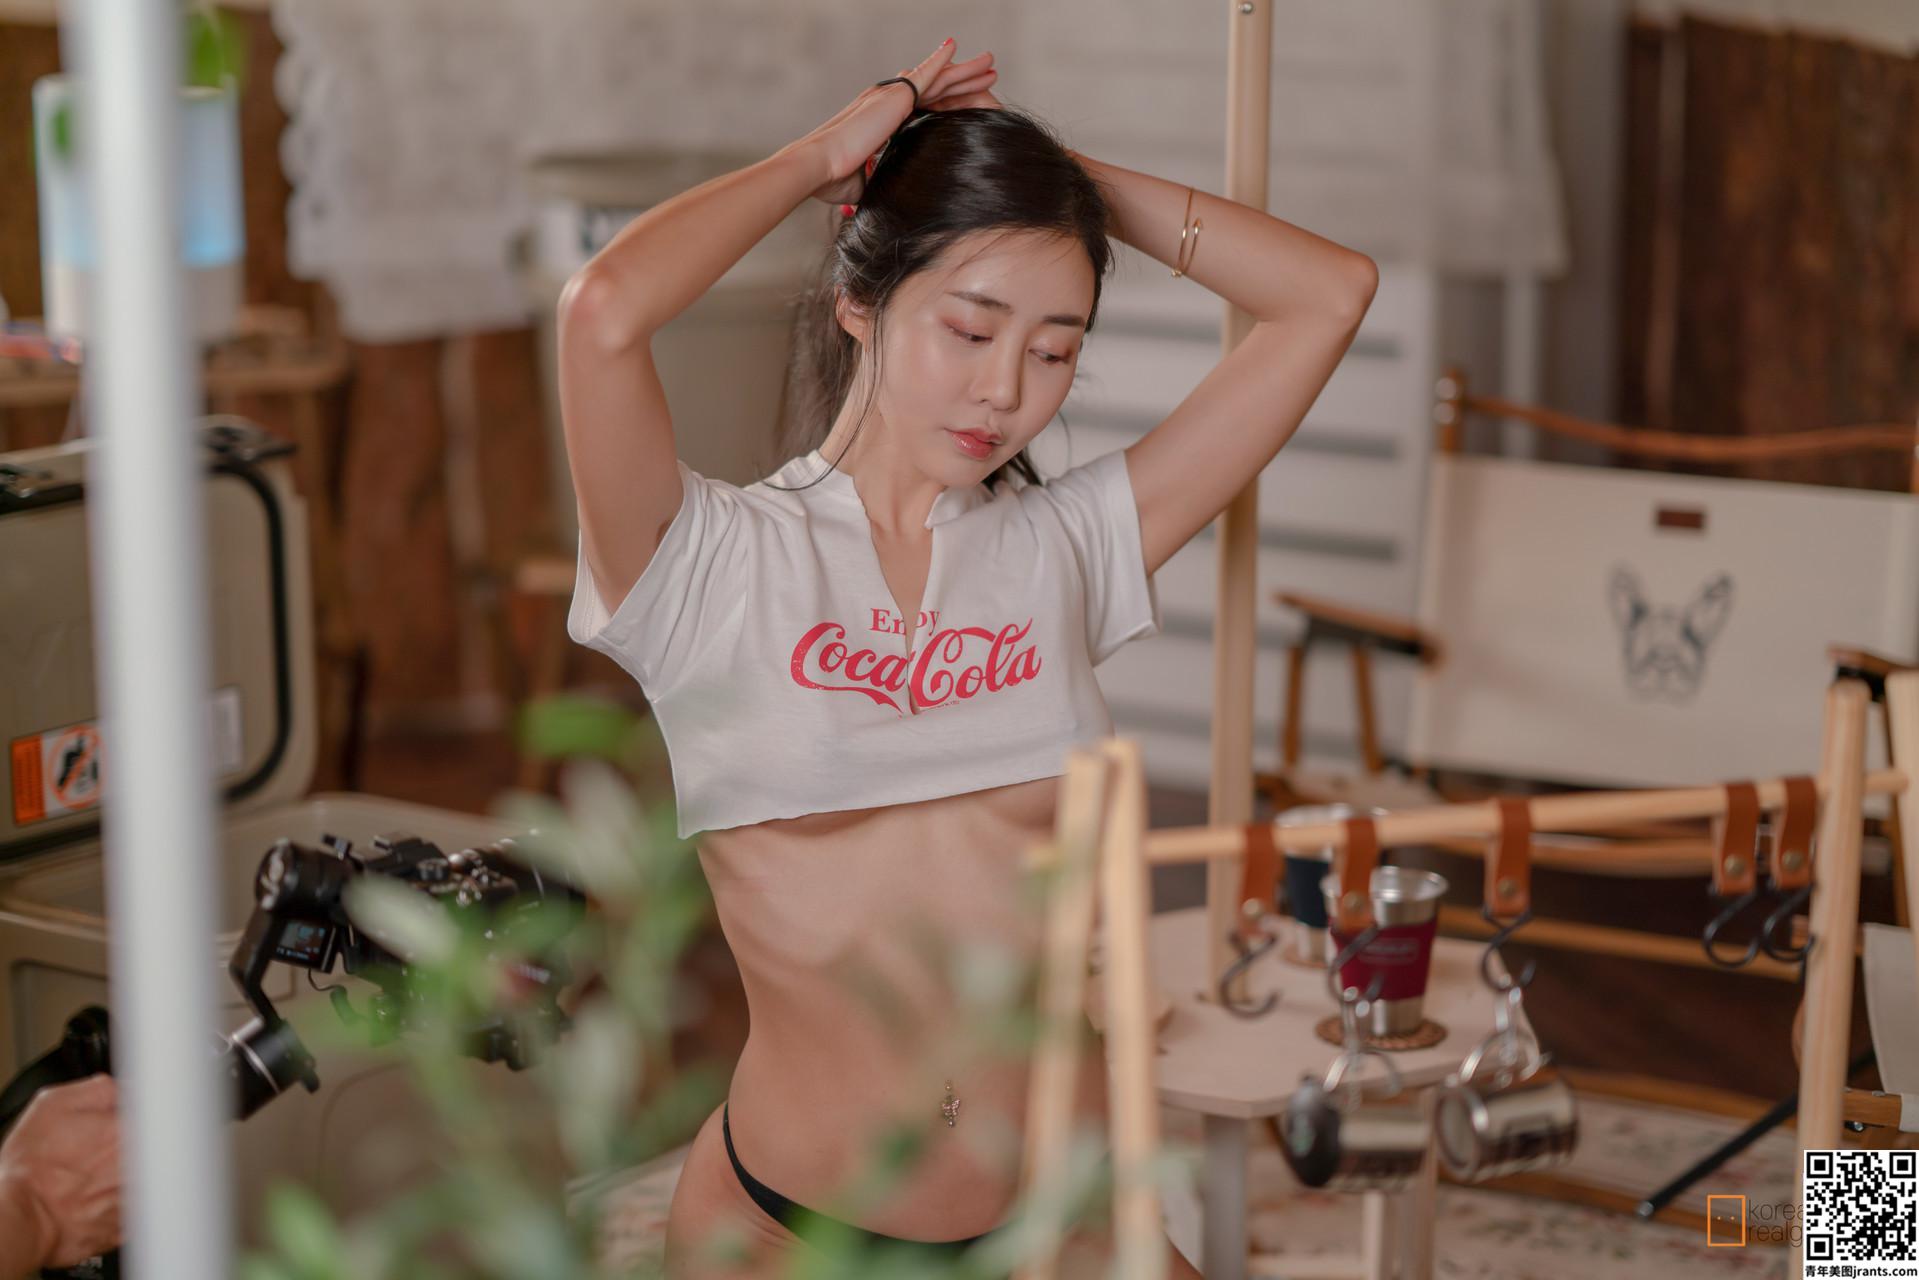 [Korean Realgraphic] 白皙美女身材好养眼 让人忍不住… (33P)